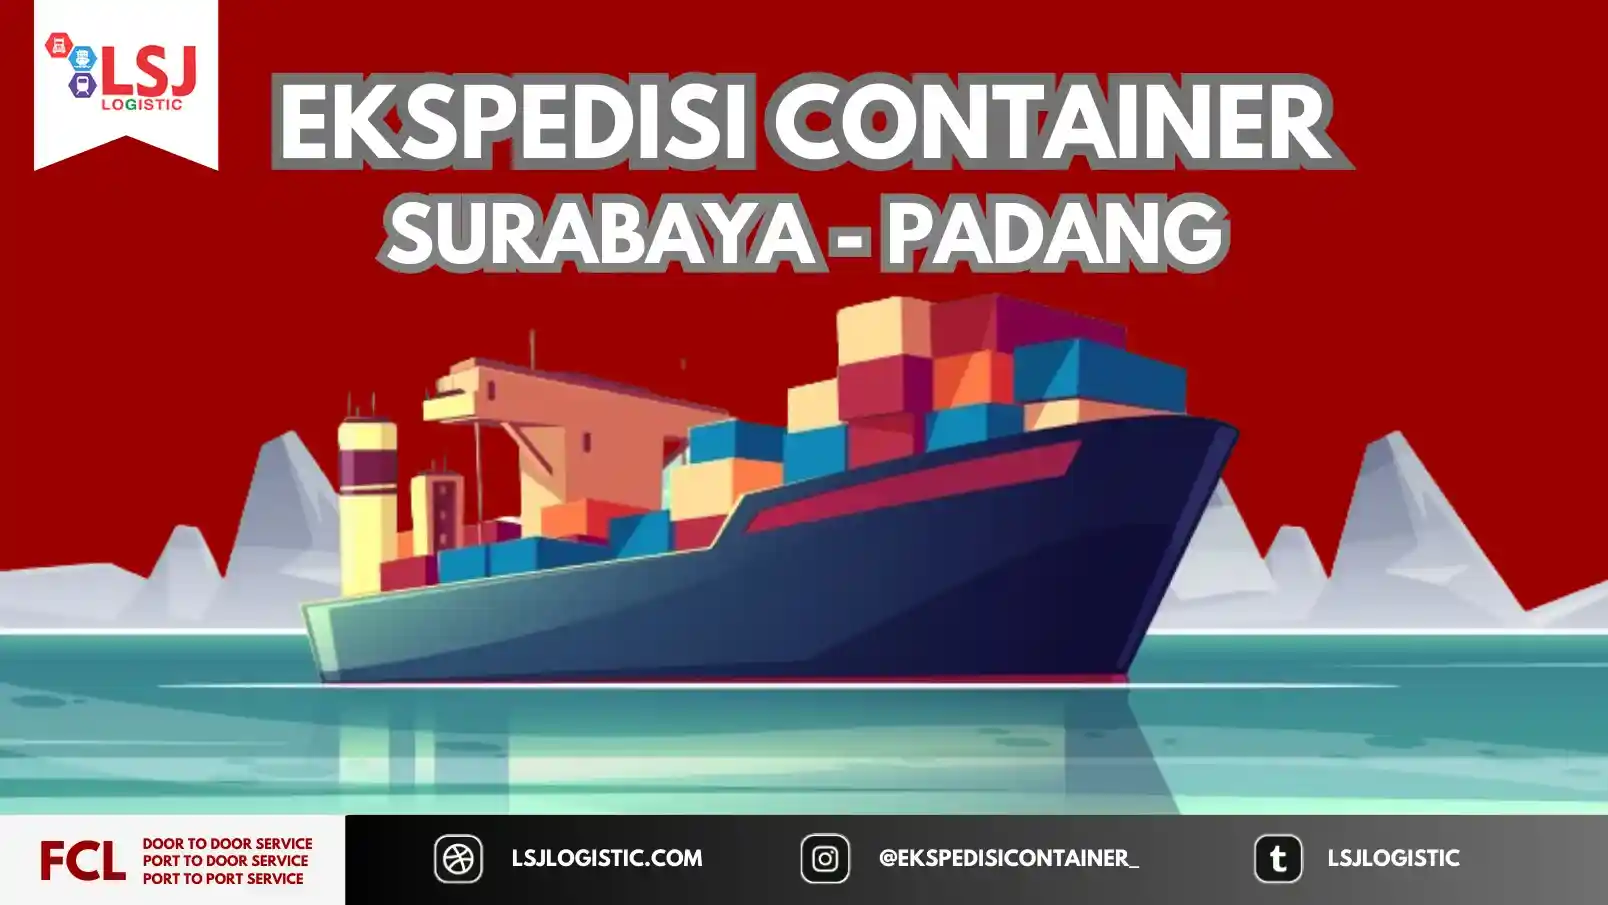 Cargo Container Surabaya Padang